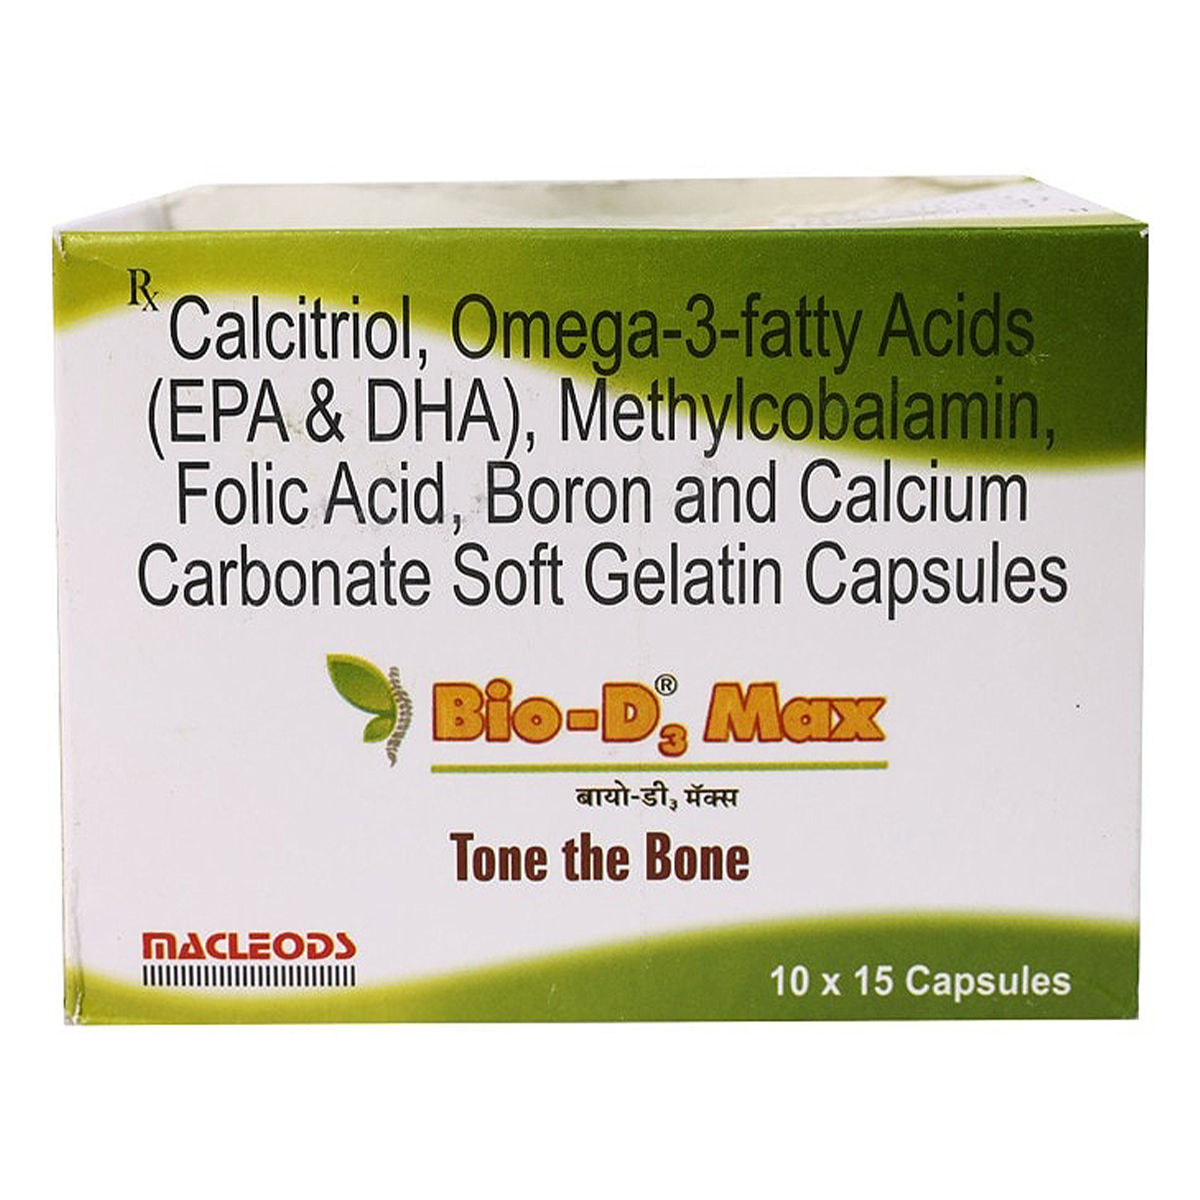 Bio-D3 Max Capsule 15's Price, Uses, Side Effects, - Apollo Pharmacy